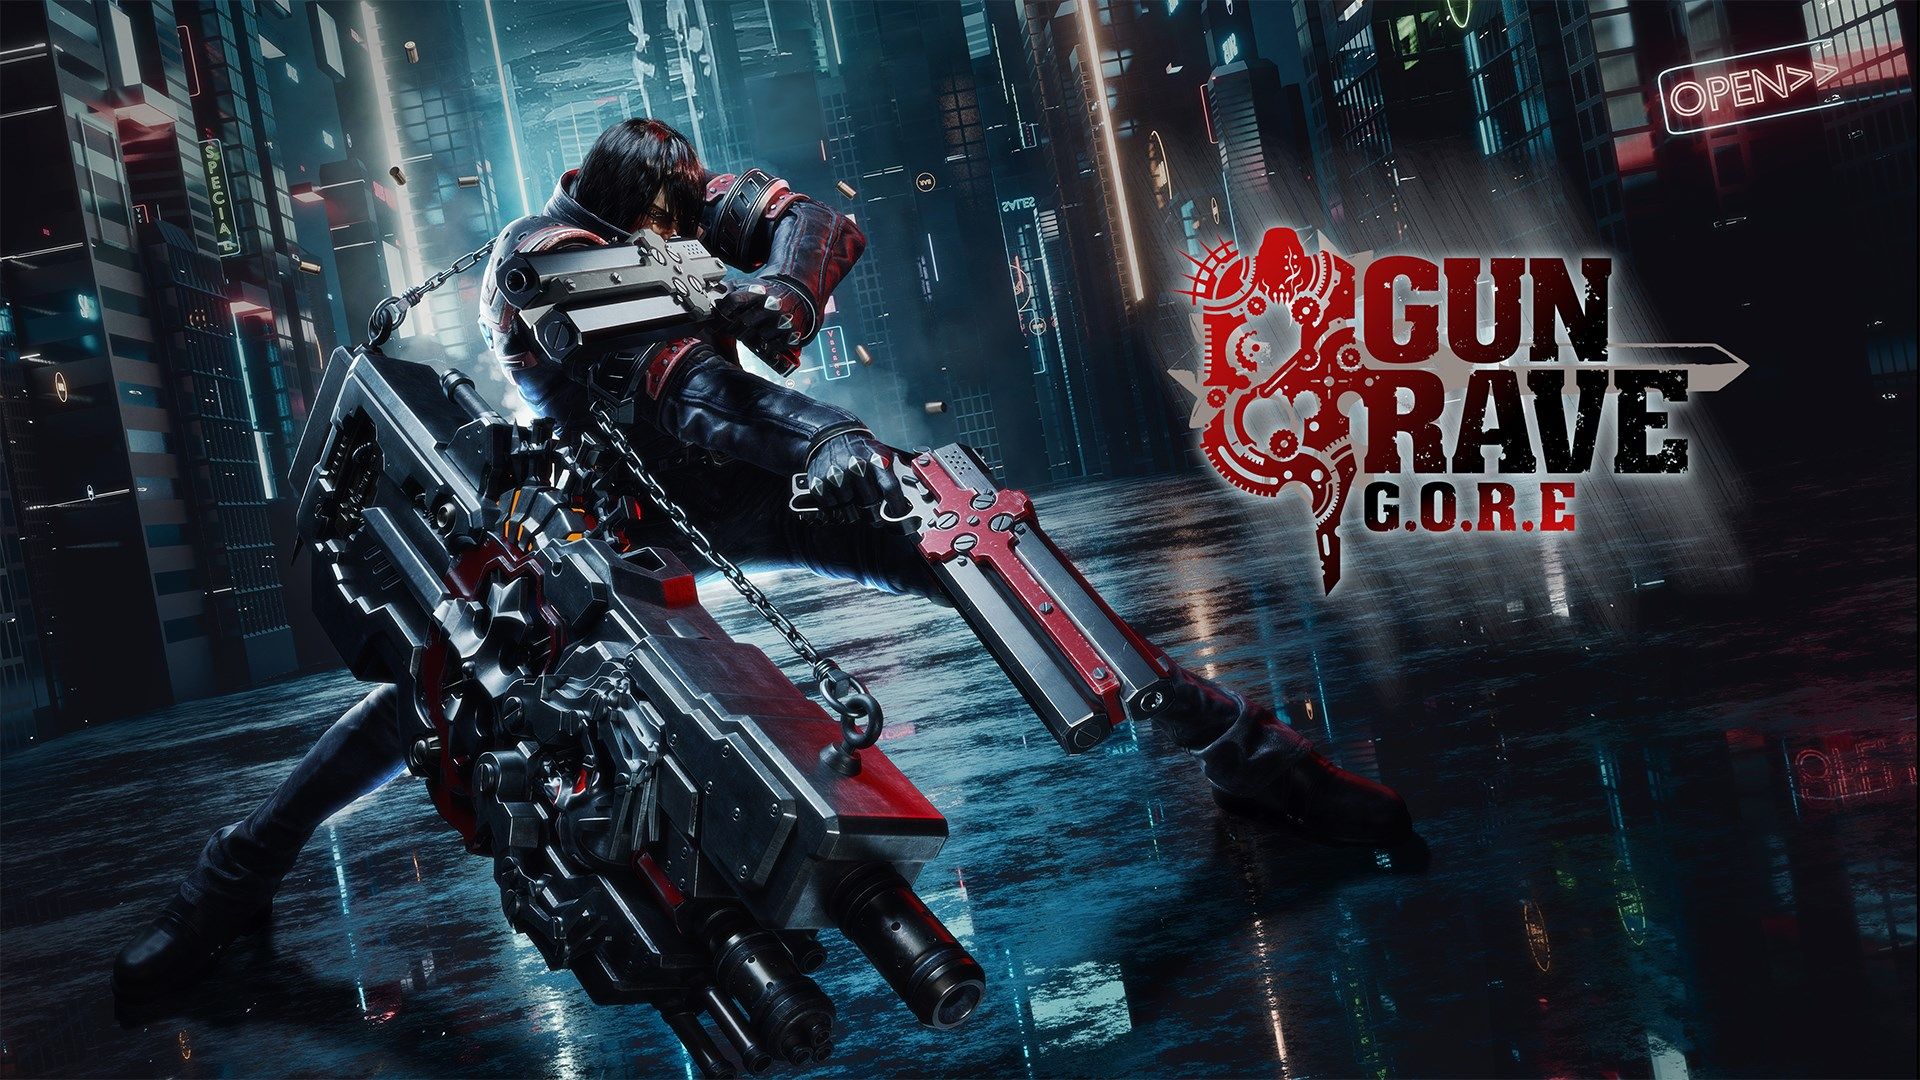 Titel: Gungrave GORE tilgængelig i dag med Xbox Game Pass